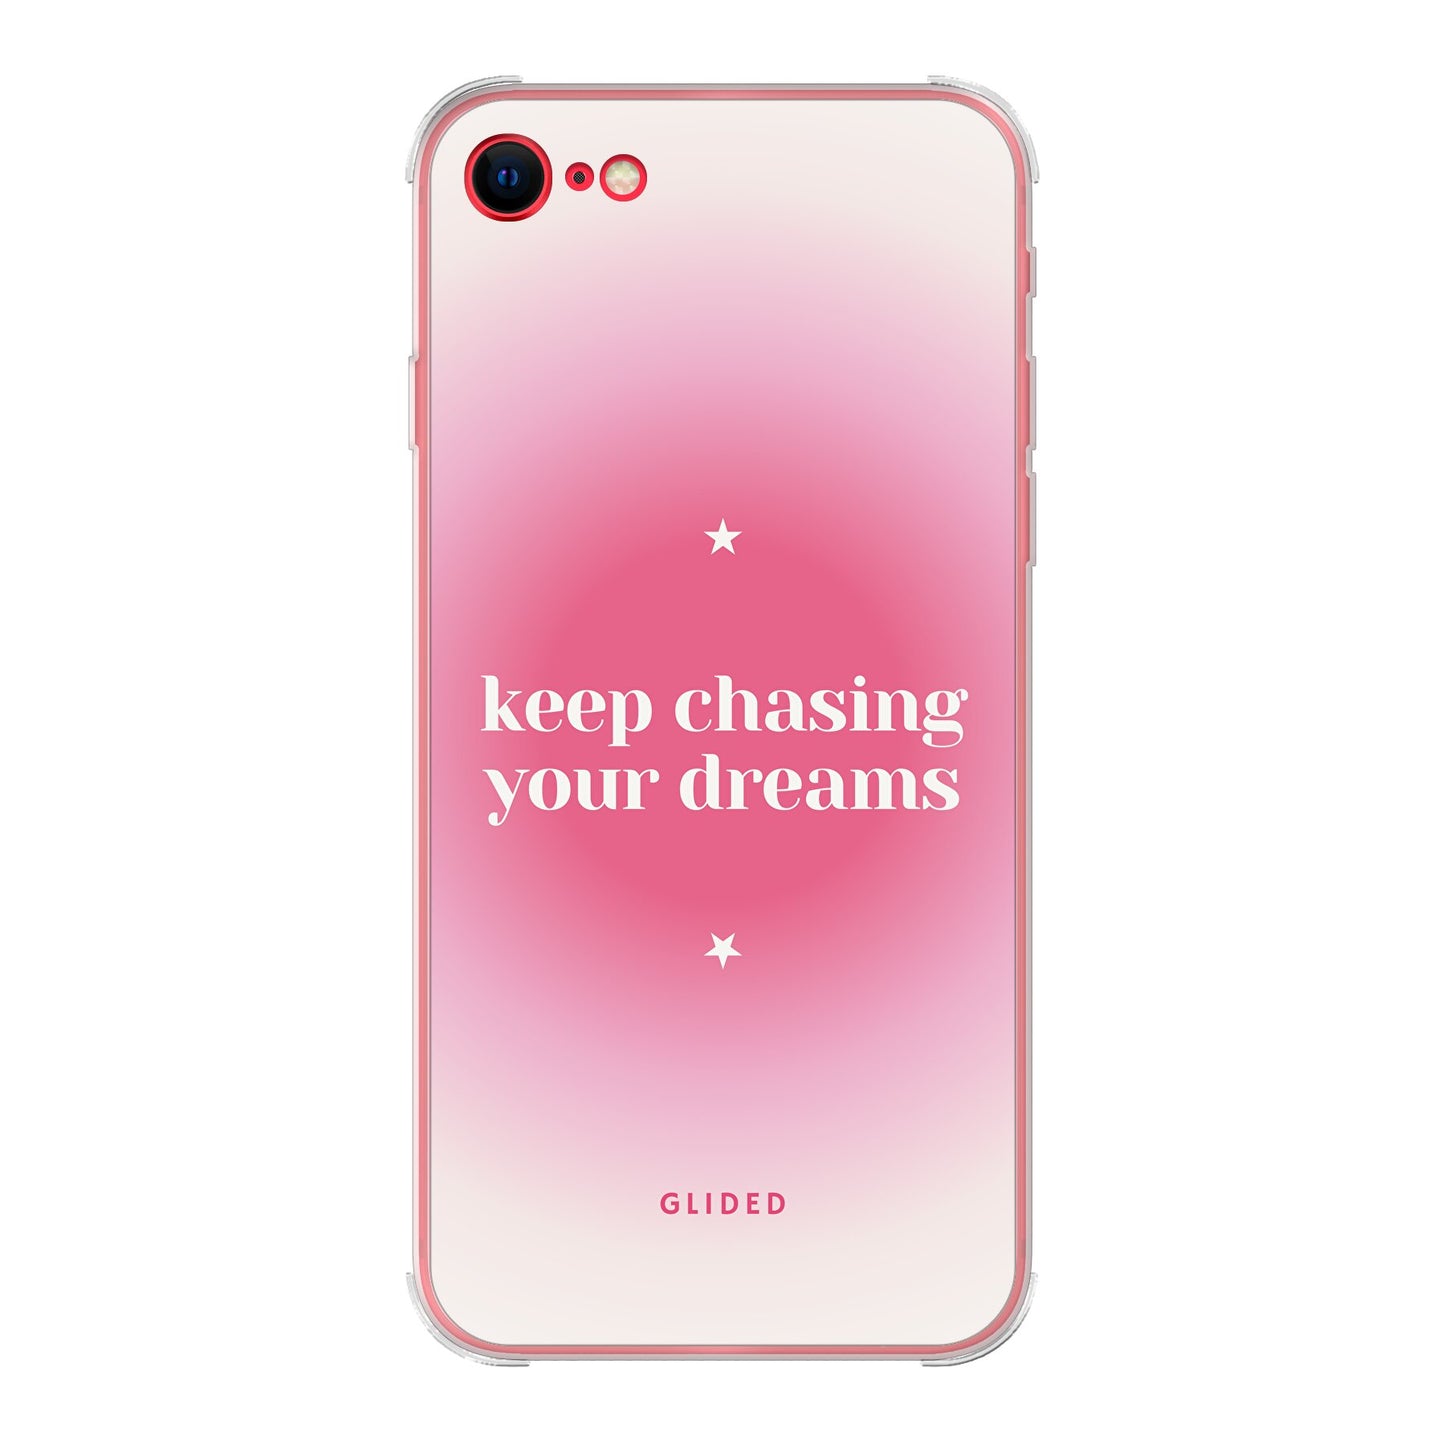 Chasing Dreams - iPhone 7 Handyhülle Bumper case